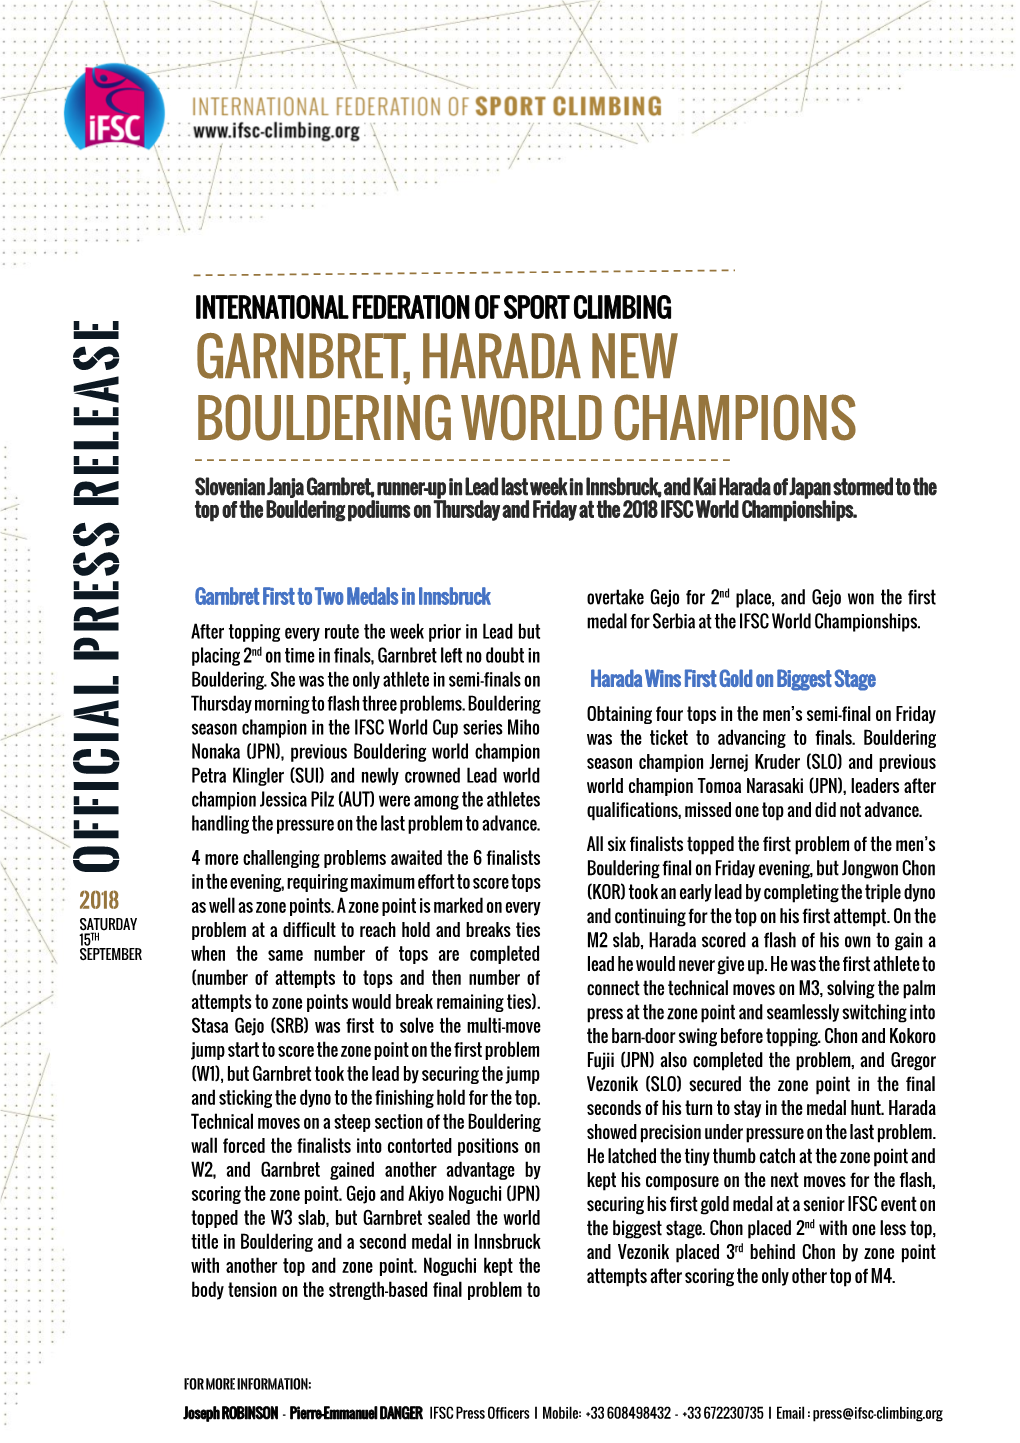 Garnbret, Harada New Bouldering World Champions